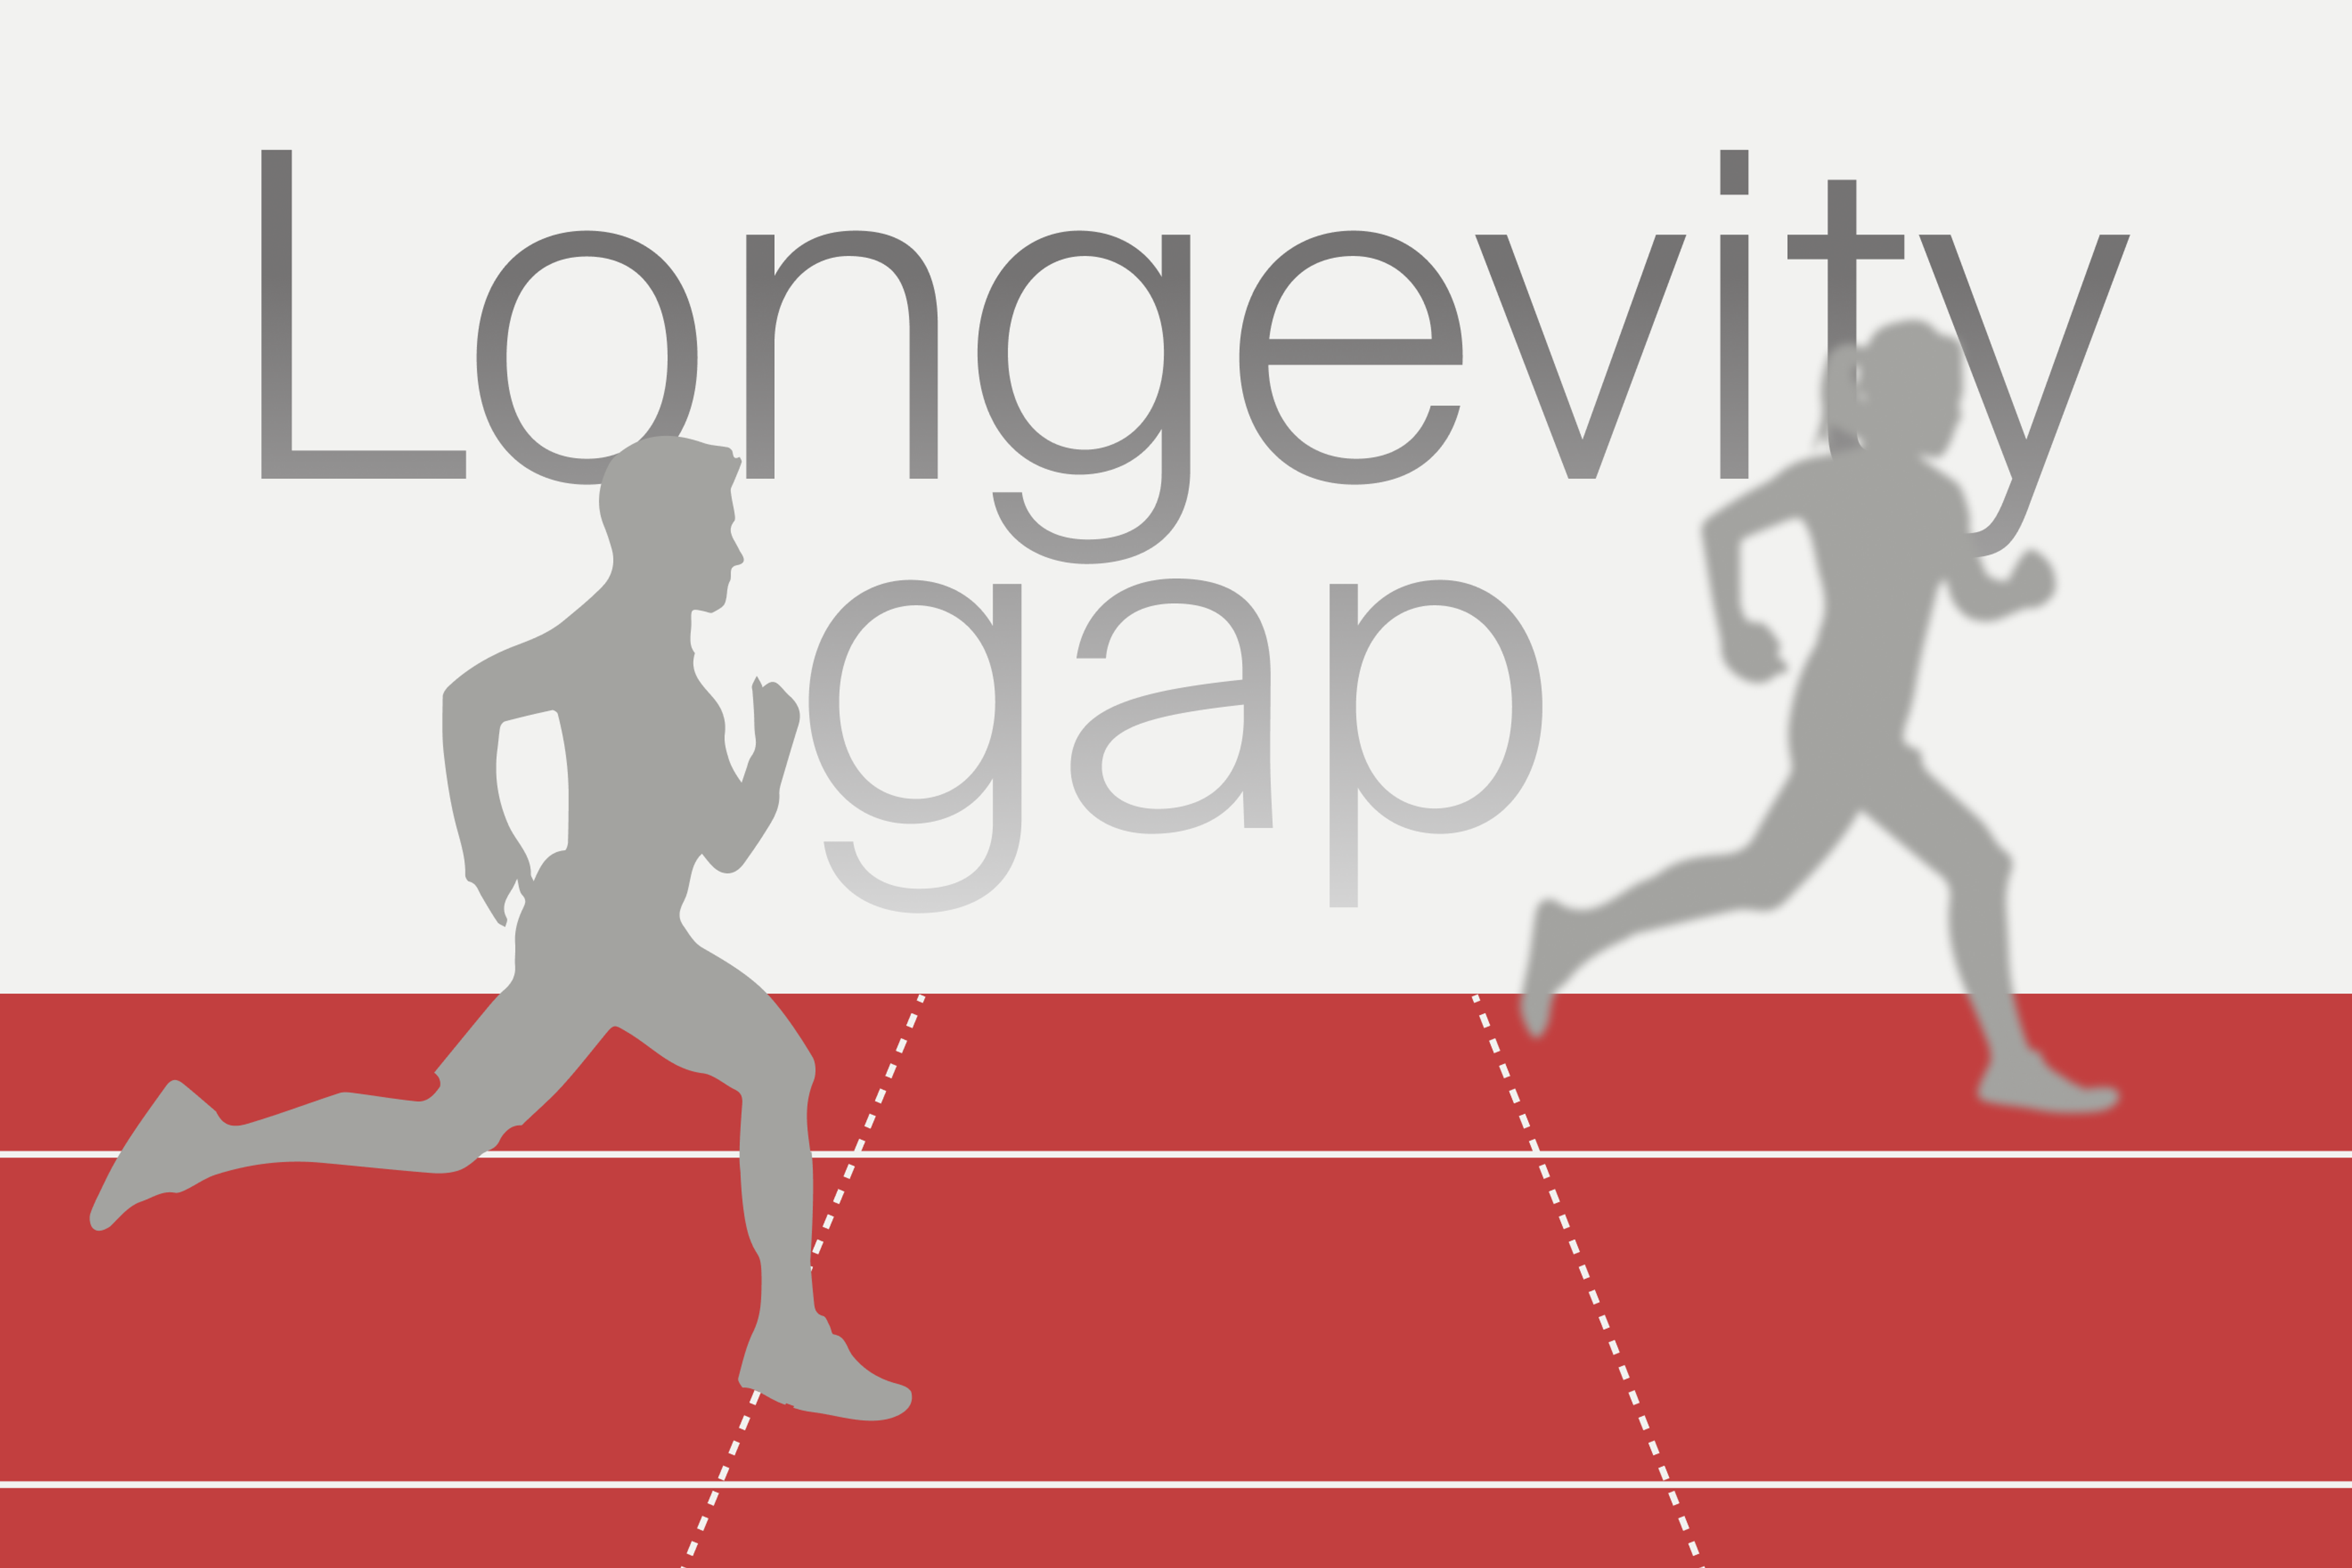 Representation of the longevity Gap between Men and Women